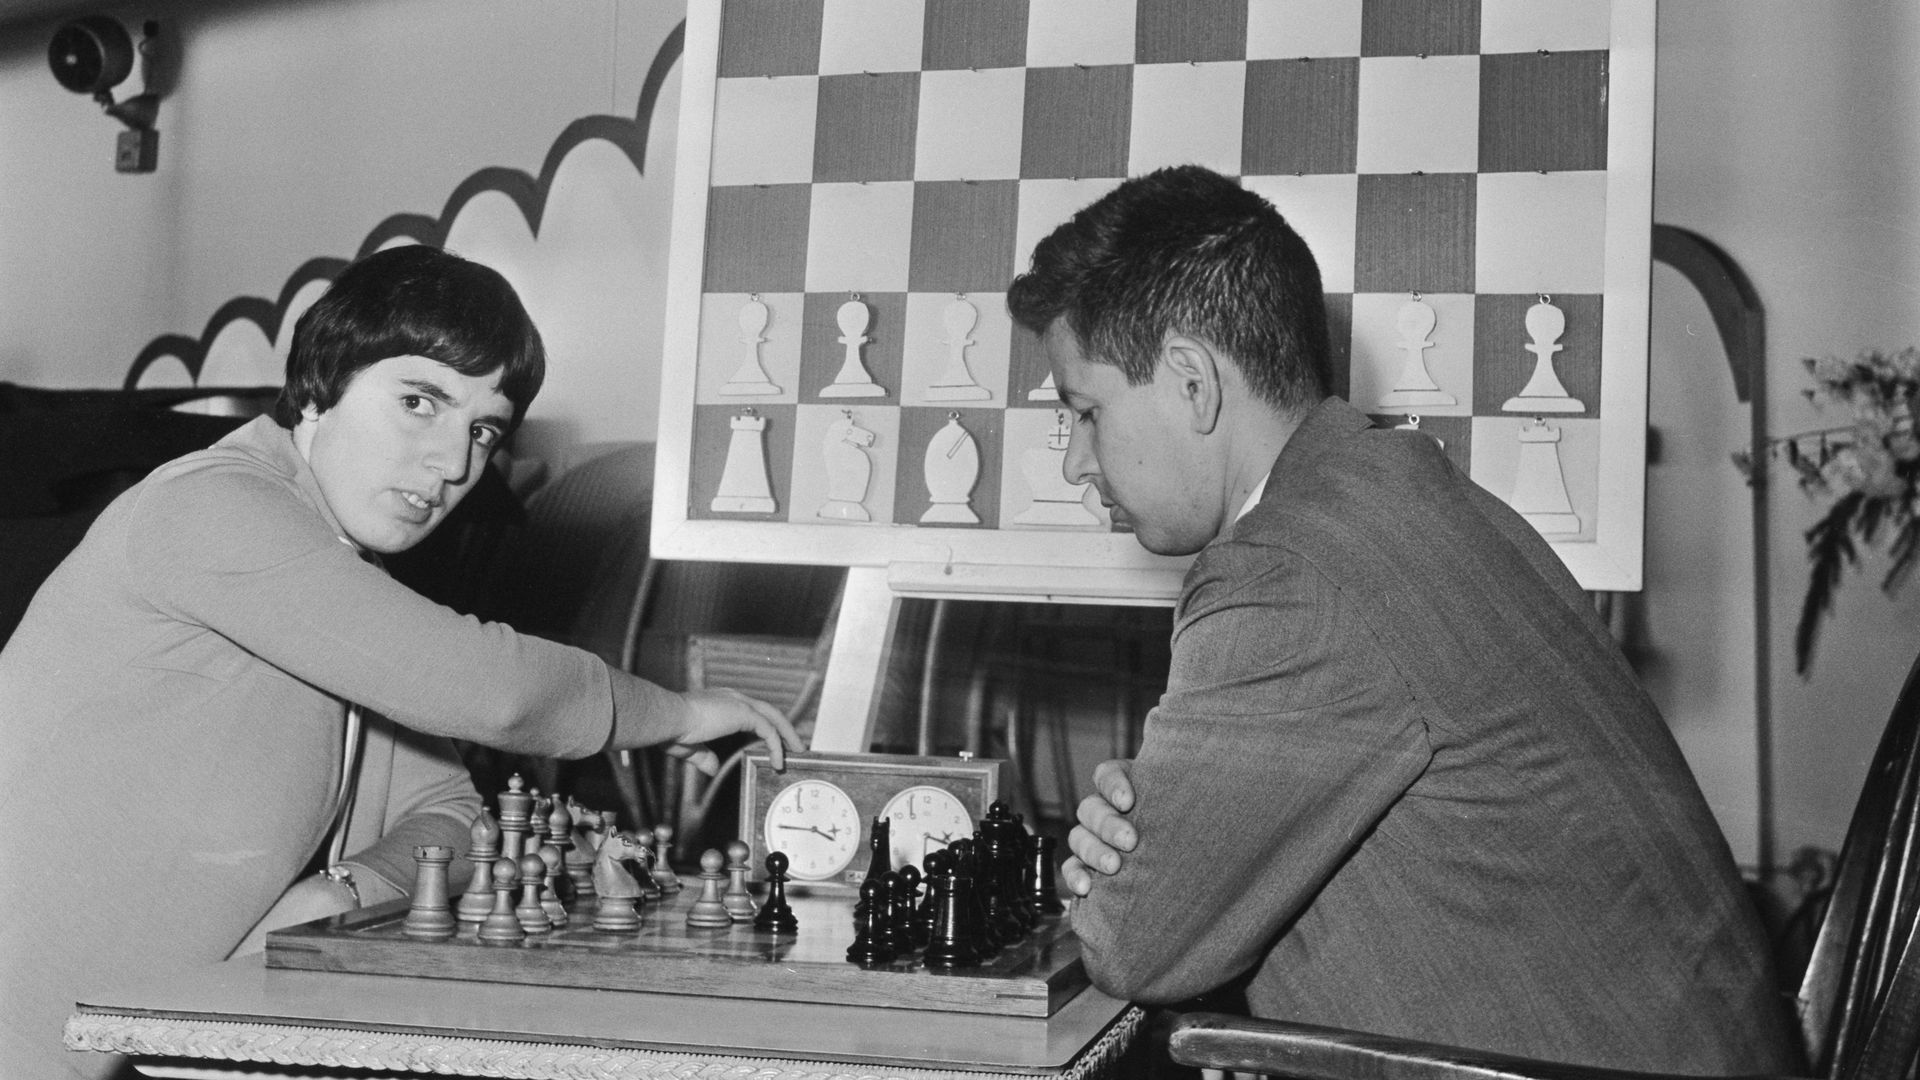 Georgian and Soviet chess player Nona Gaprindashvili (left) takes part in the International Chess Congress in London.